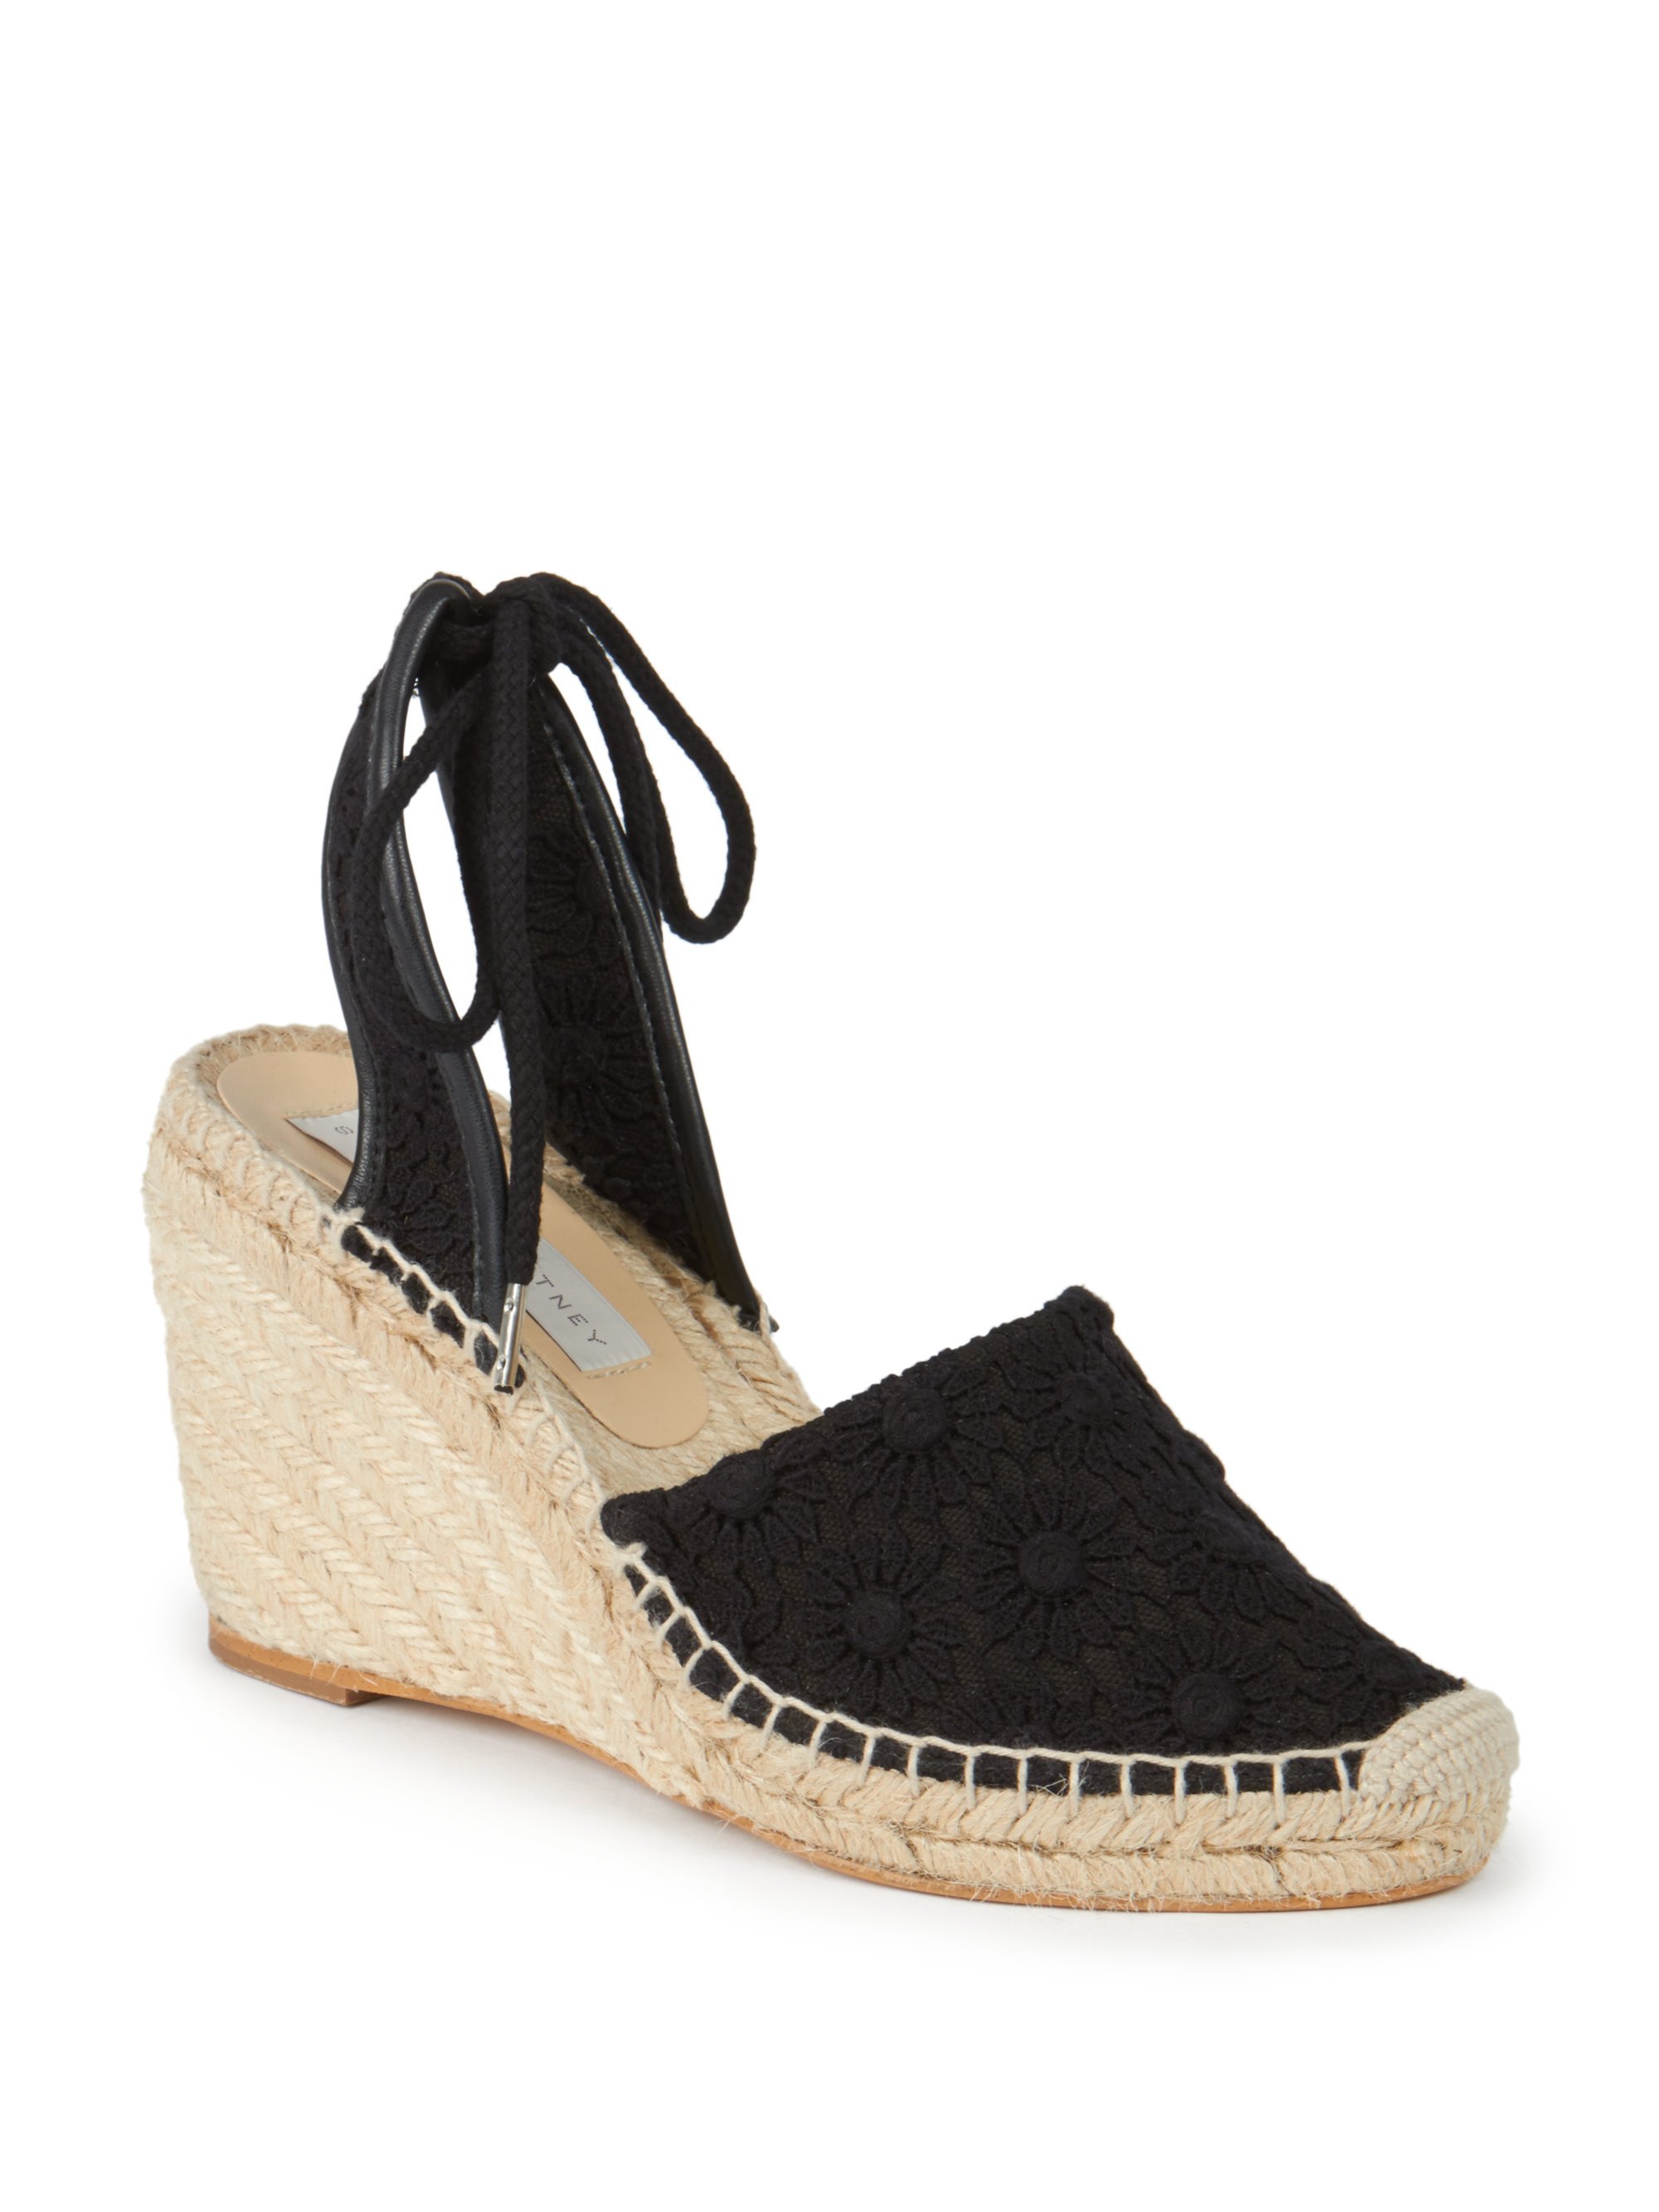 Stella McCartney Lace Espadrille Wedge Sandals in Black - Lyst